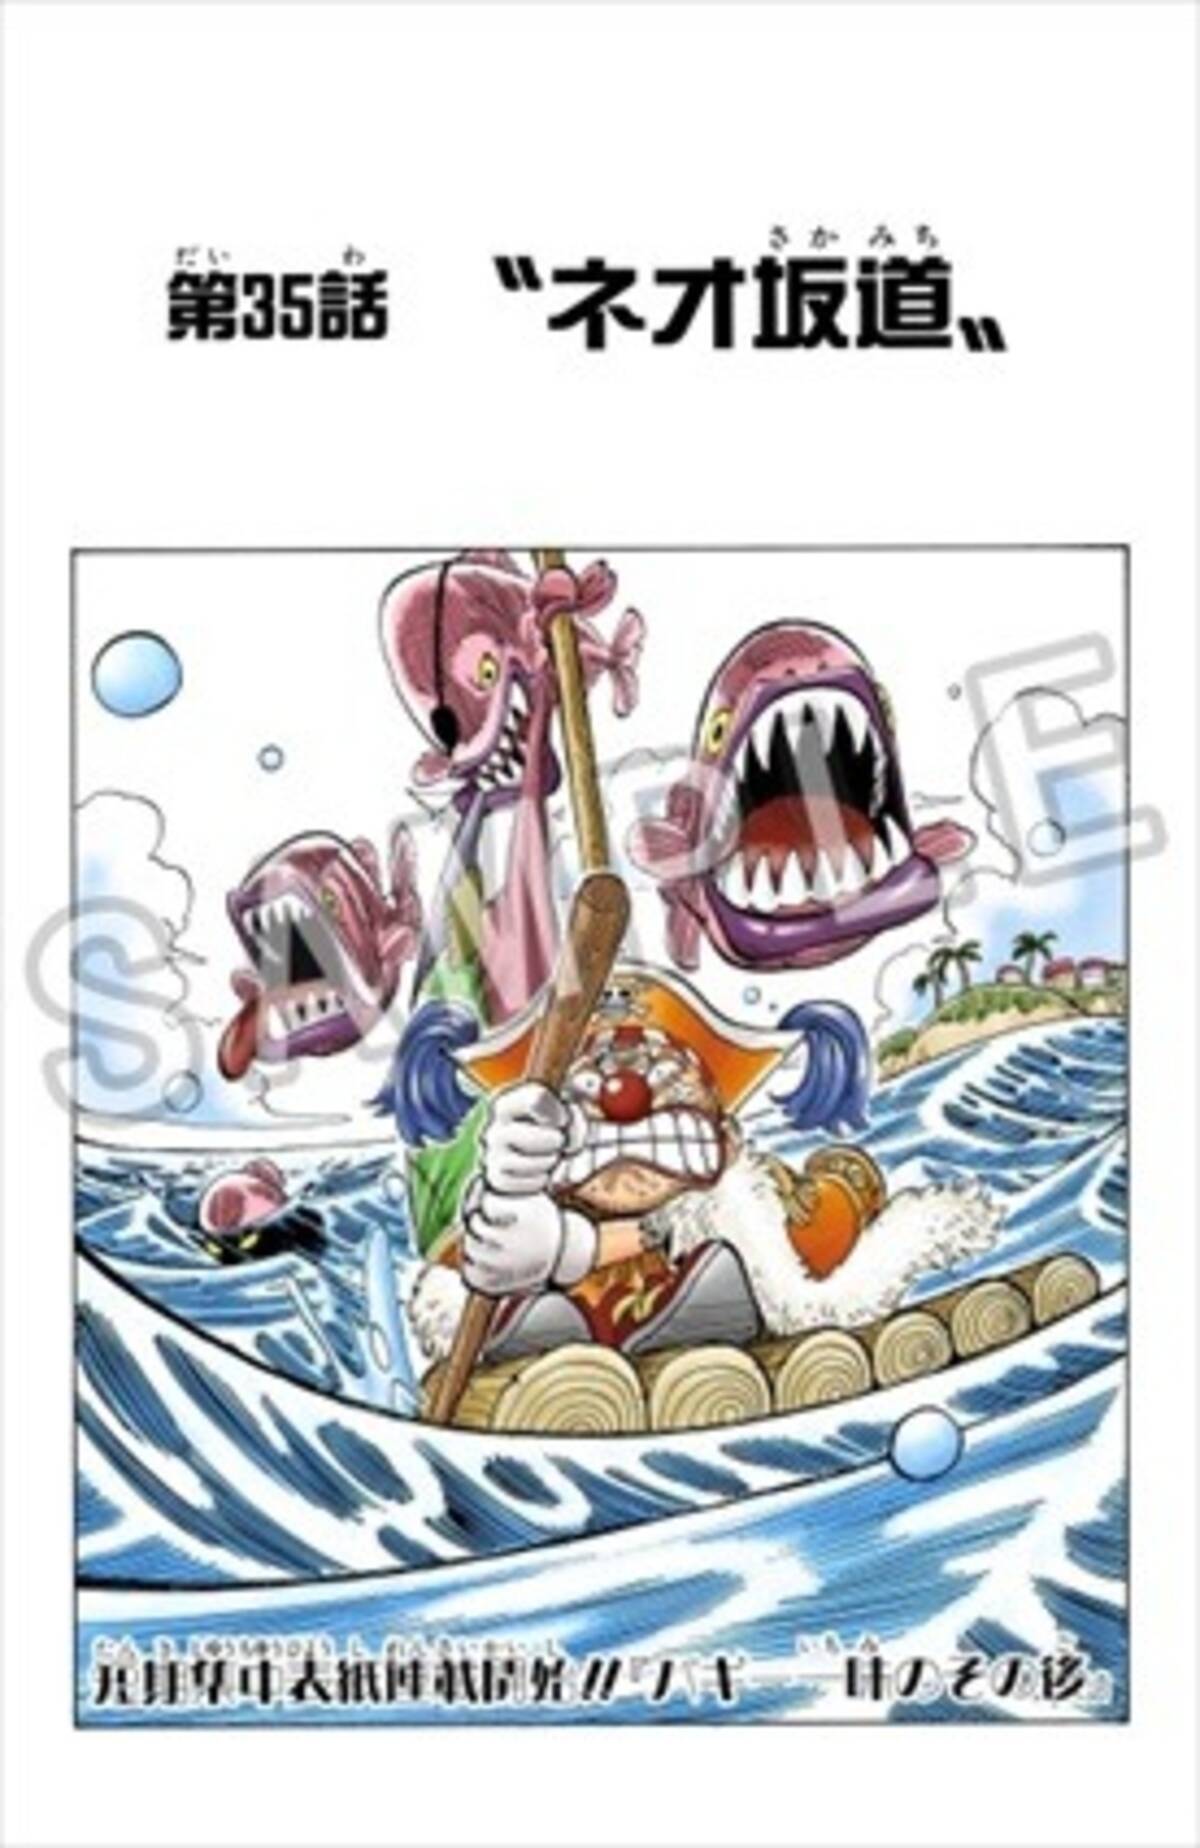 One Piece サイドストーリー描く 扉絵 をフルカラー配信 単行本80巻発売記念 15年12月29日 エキサイトニュース